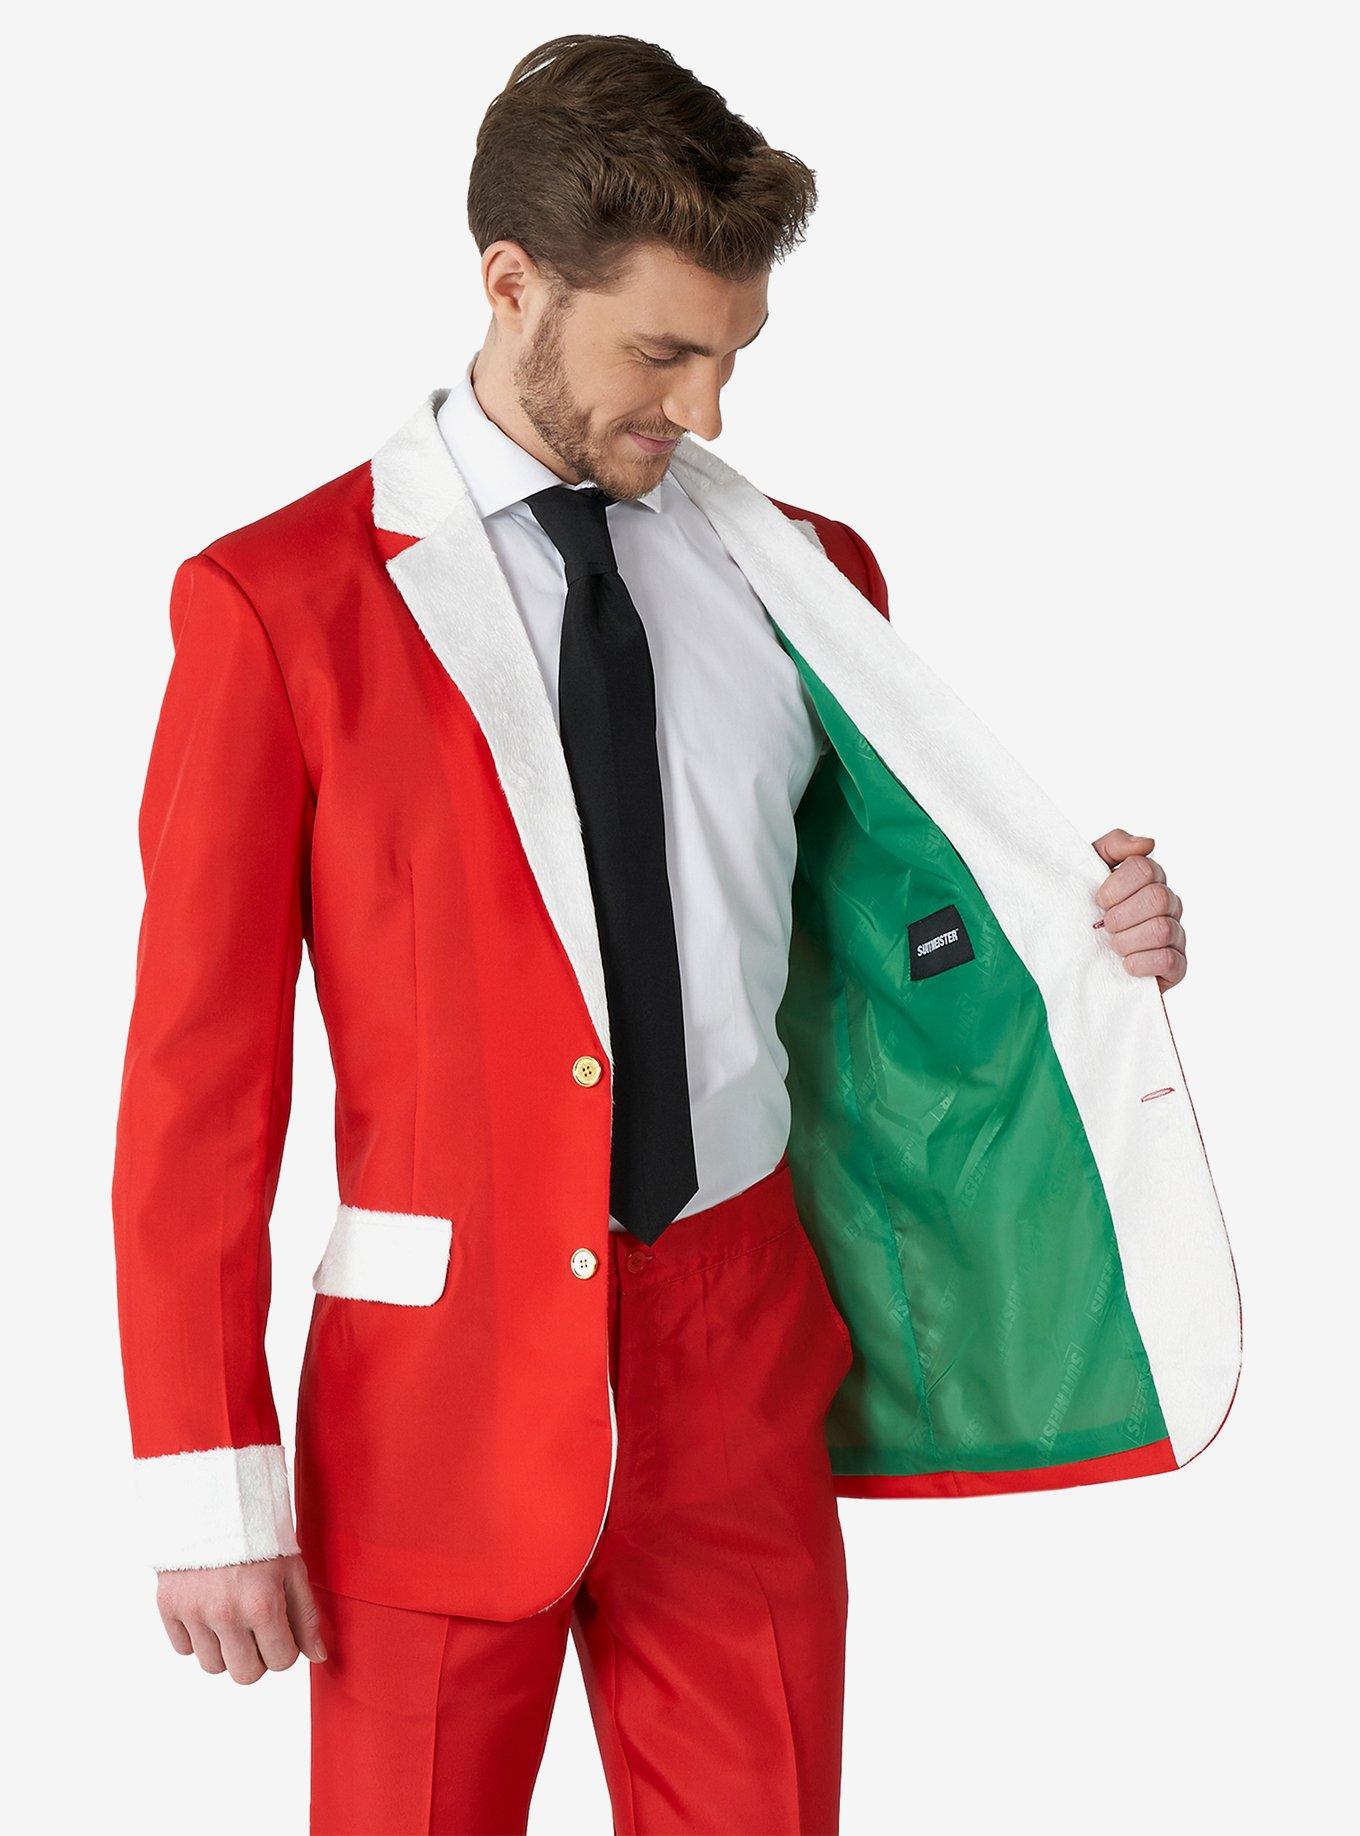 Santa Ho Ho Ho Faux Fur Suit, RED, alternate